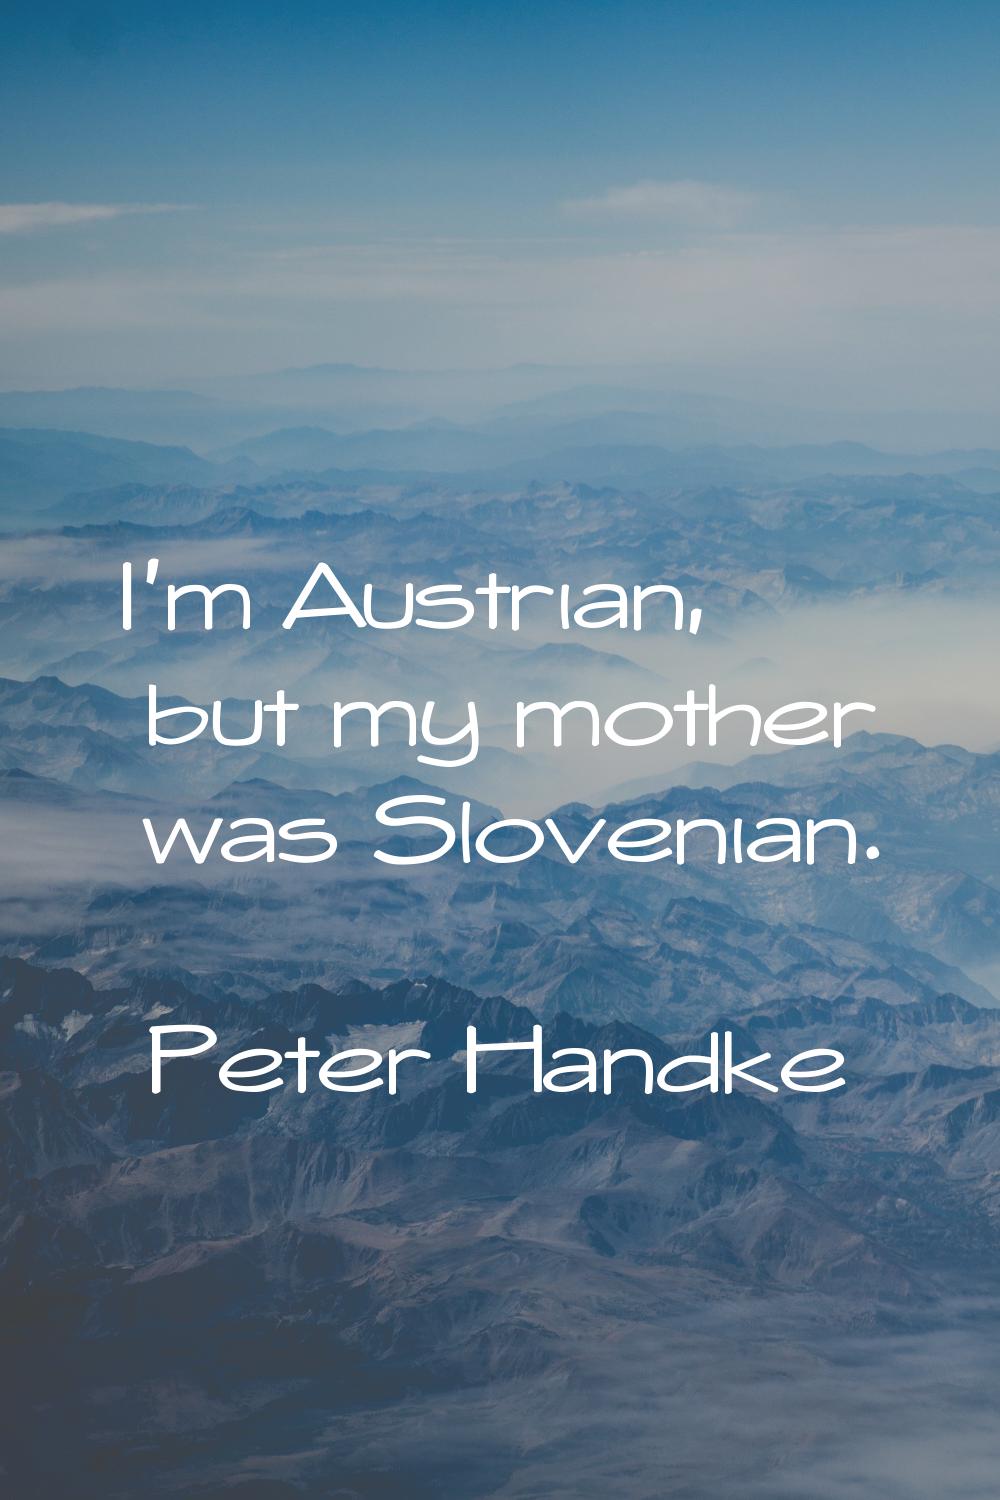 I'm Austrian, but my mother was Slovenian.